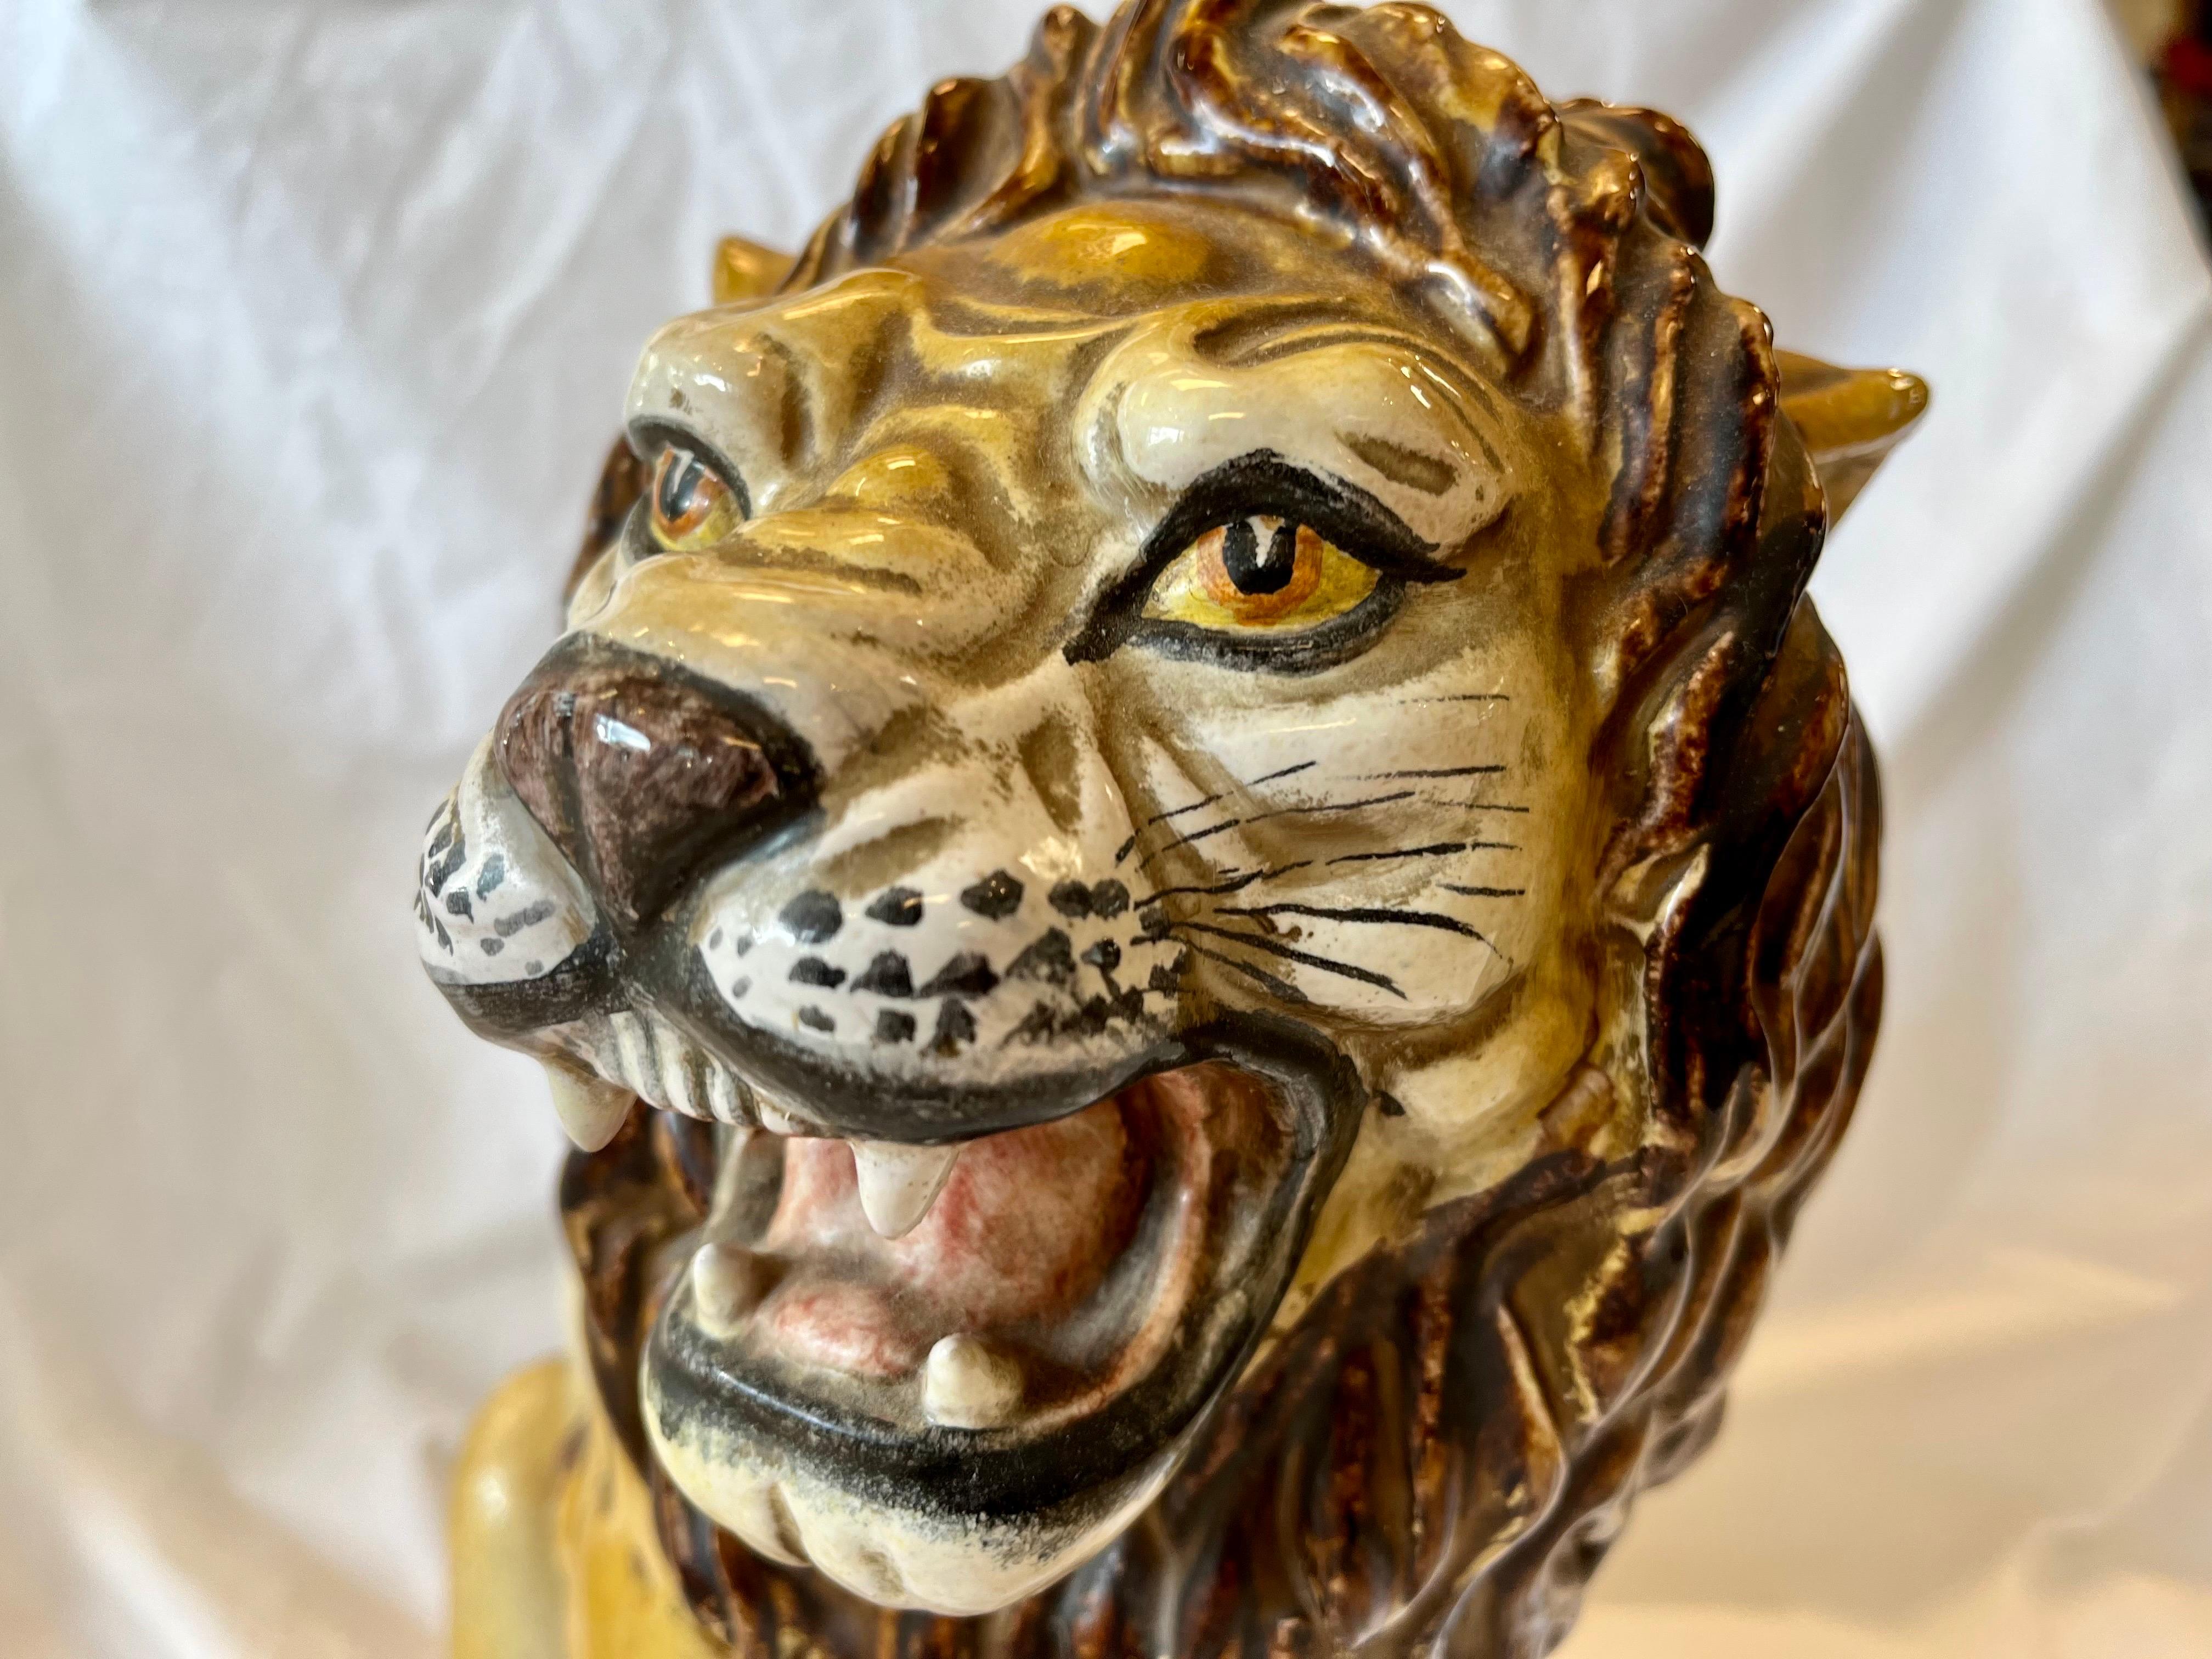 Italian Majolica Midcentury Terracotta Glazed Roaring Seated Lion Sculpture For Sale 4